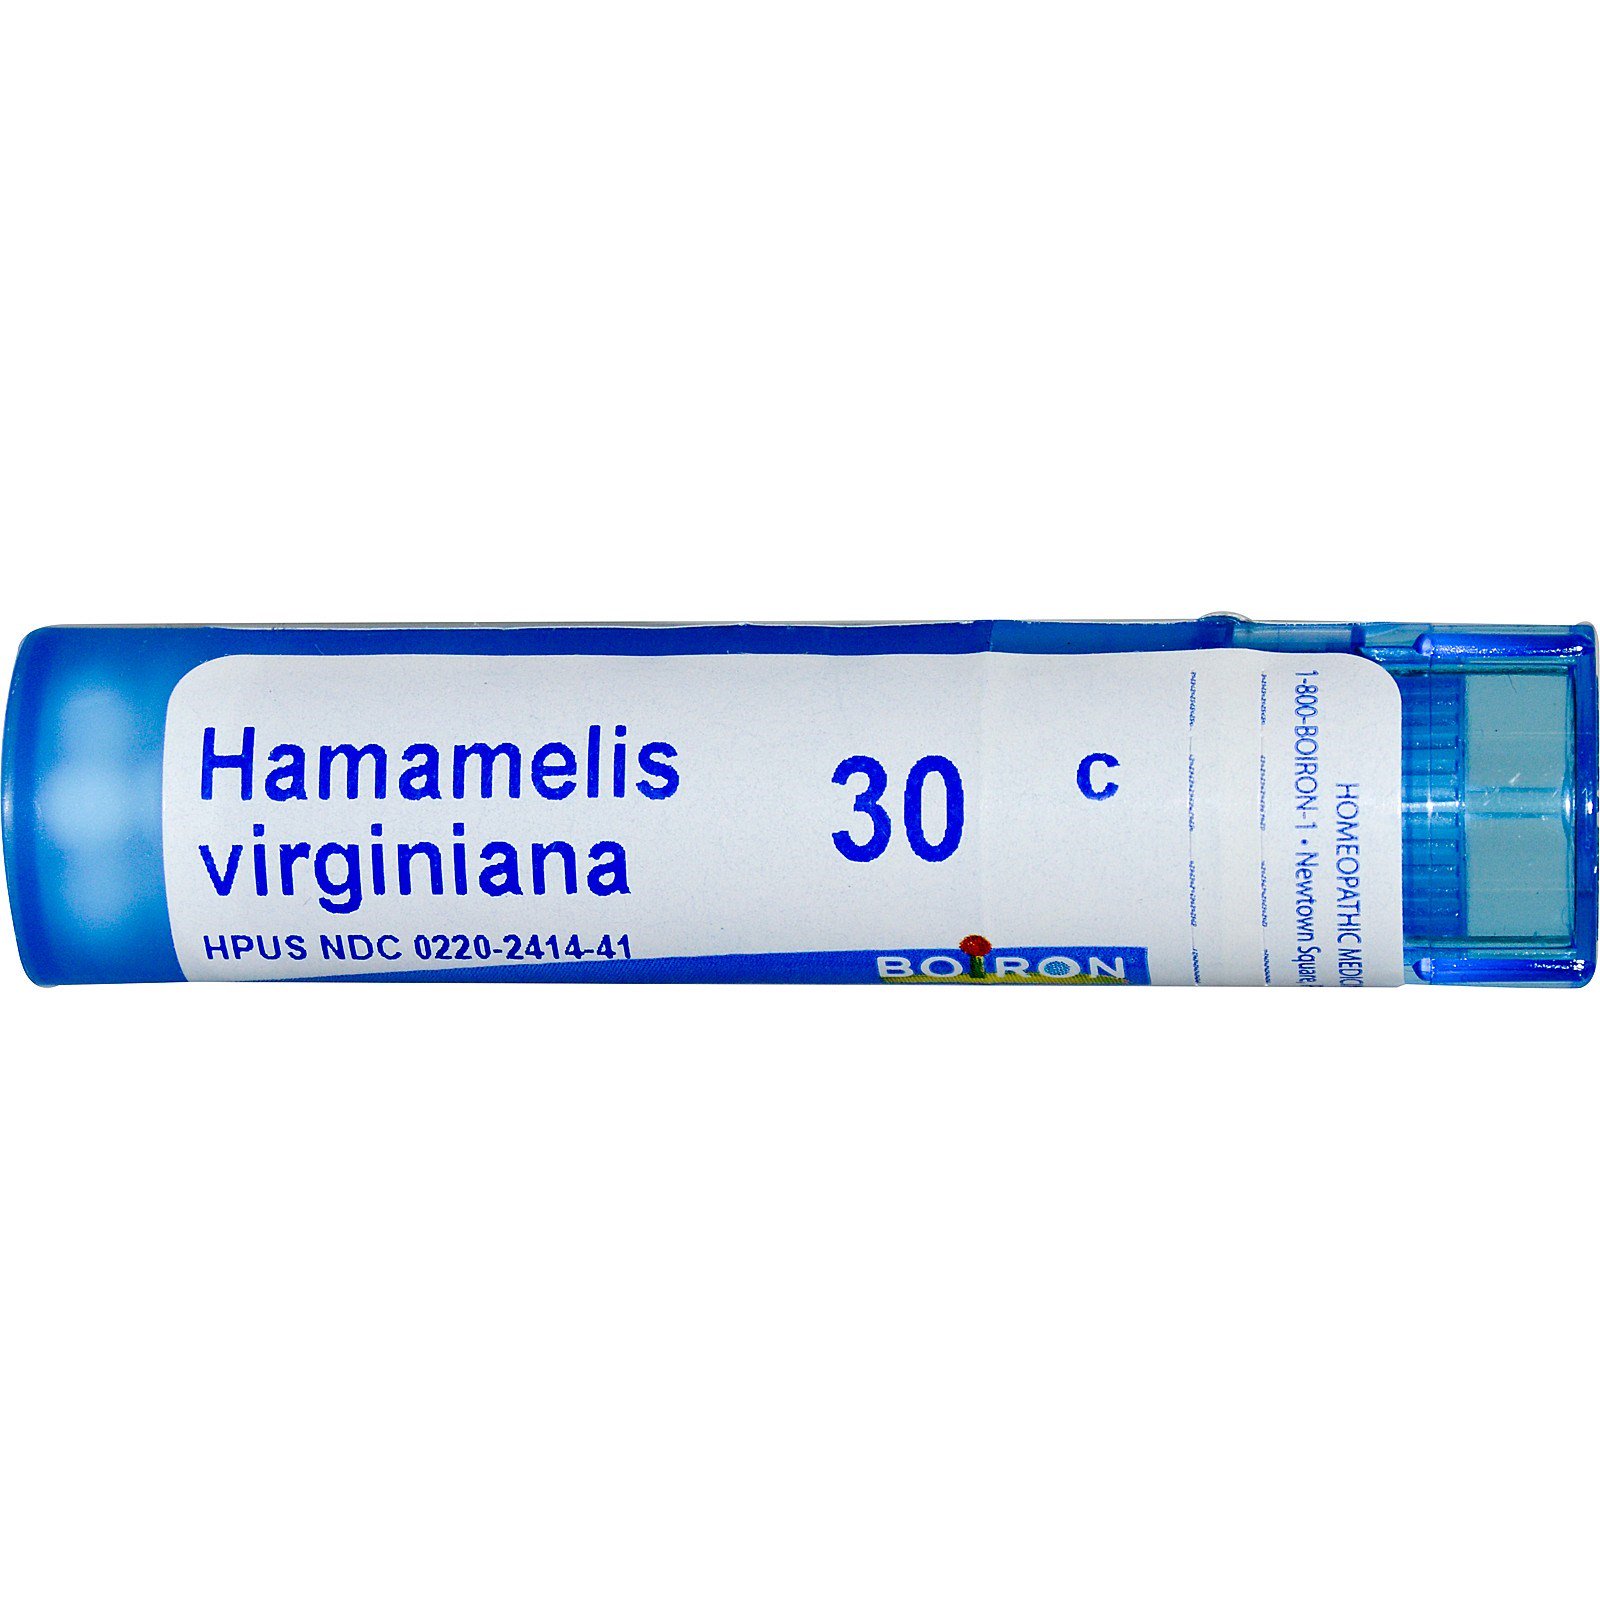 Гамамелис вирджинский, 30 С - пилюли от геморроя